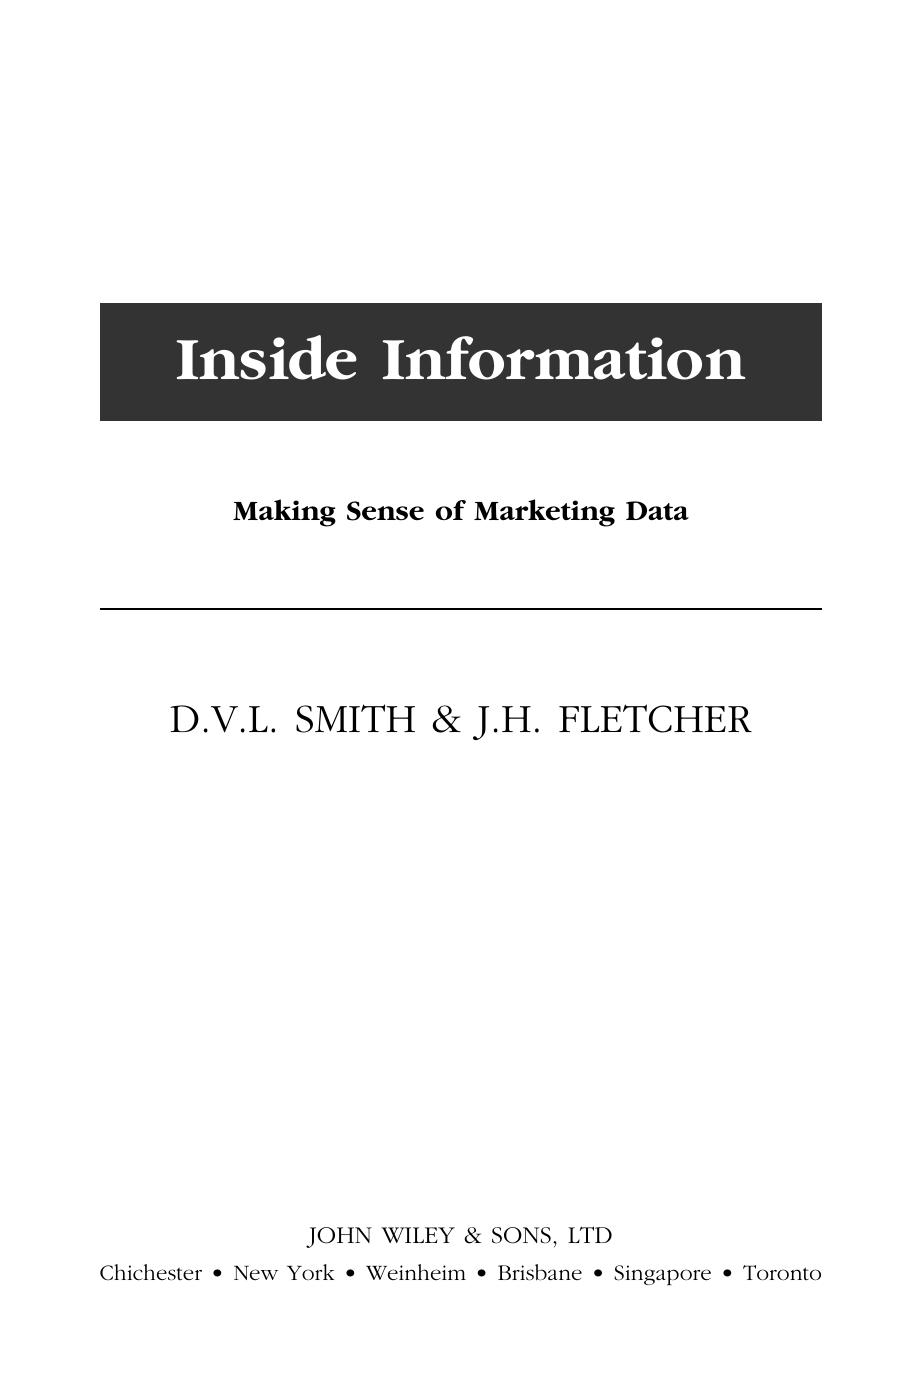 D. V. L. Smith, J. H. Fletcher-Inside Information Making Sense of Marketing Data-Wiley (2001)